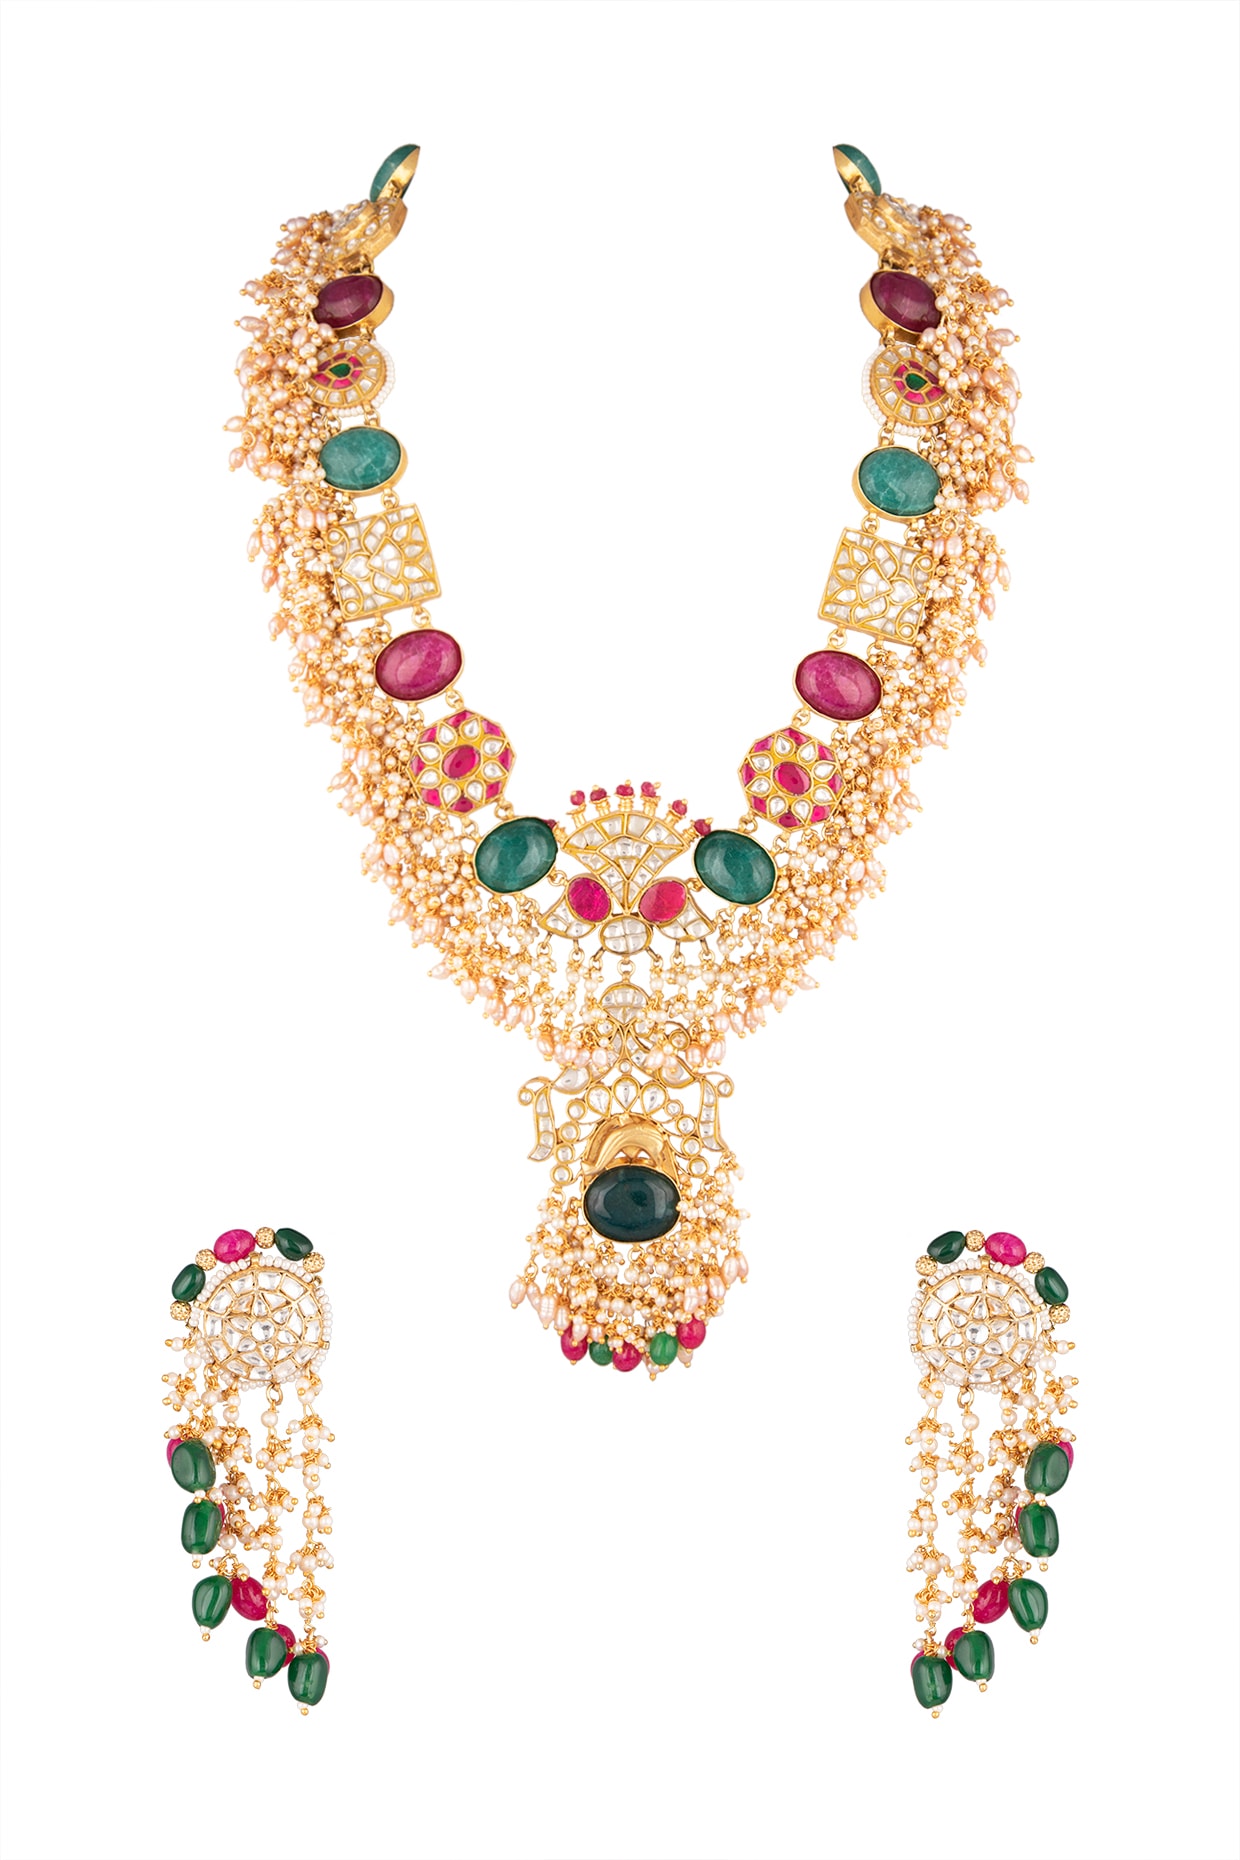 Buy quality 916 gold Antique jadtar hallmark necklace set in Ahmedabad